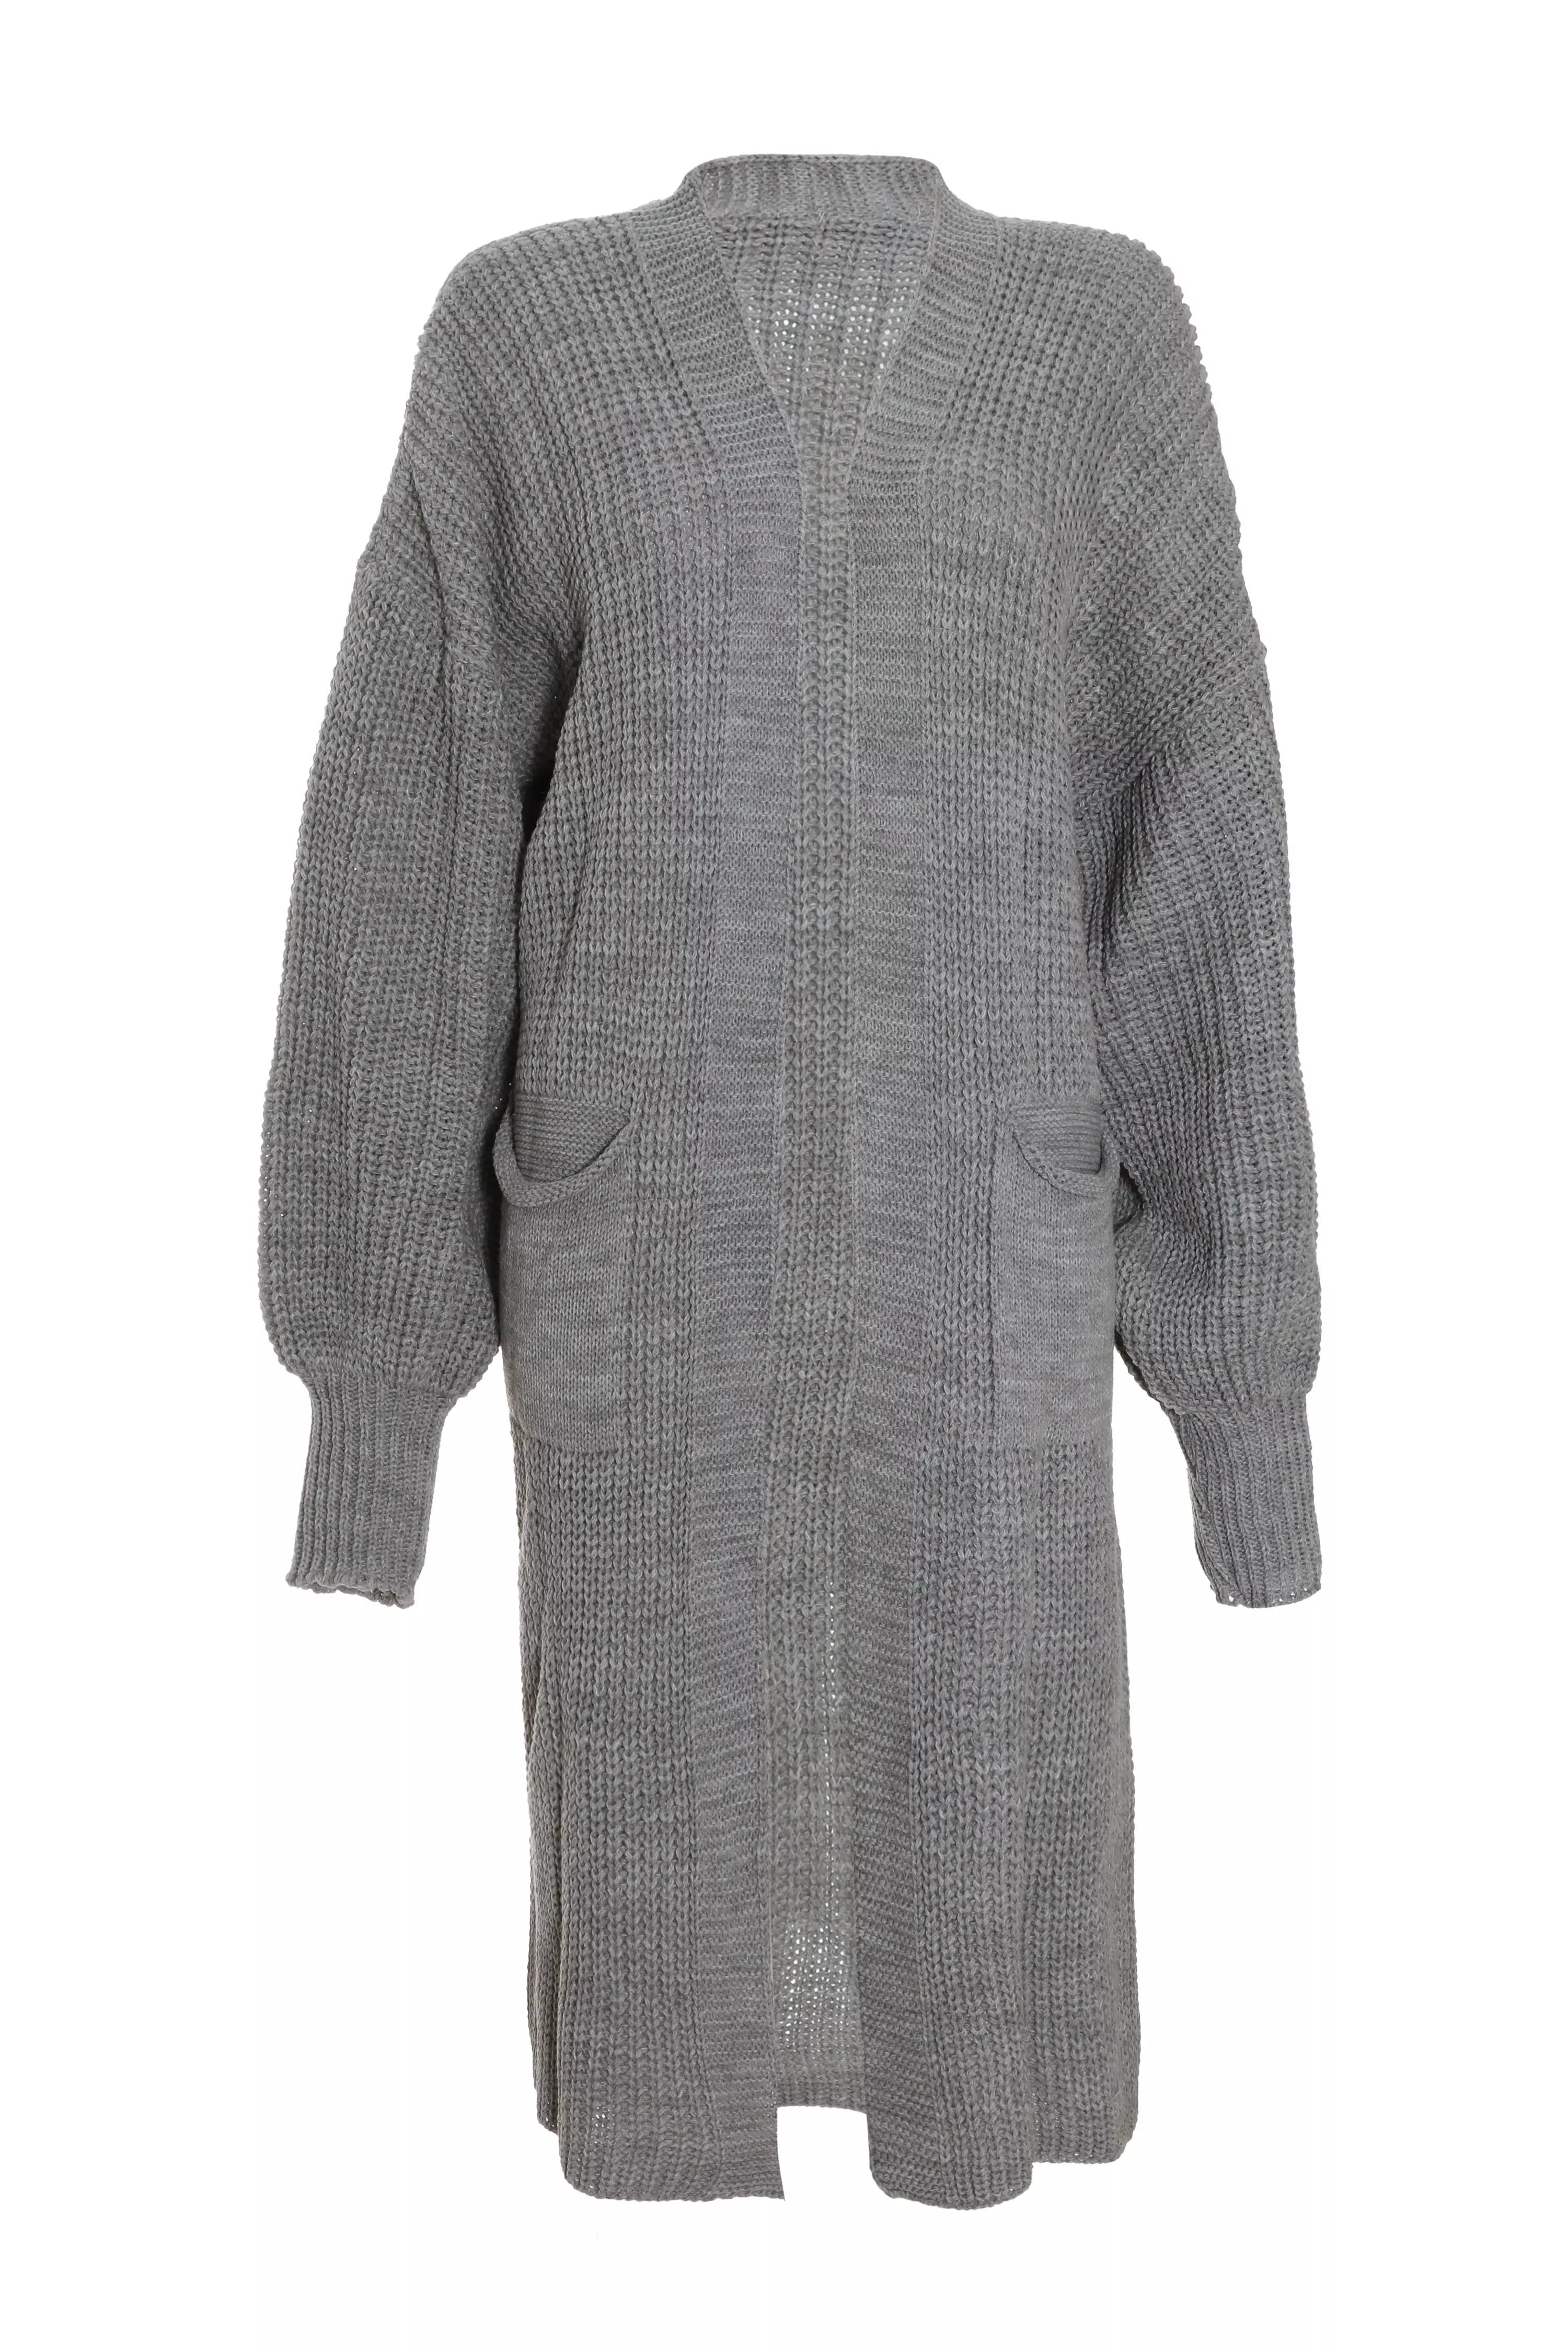 Grey Long Knitted Cardigan - QUIZ Clothing